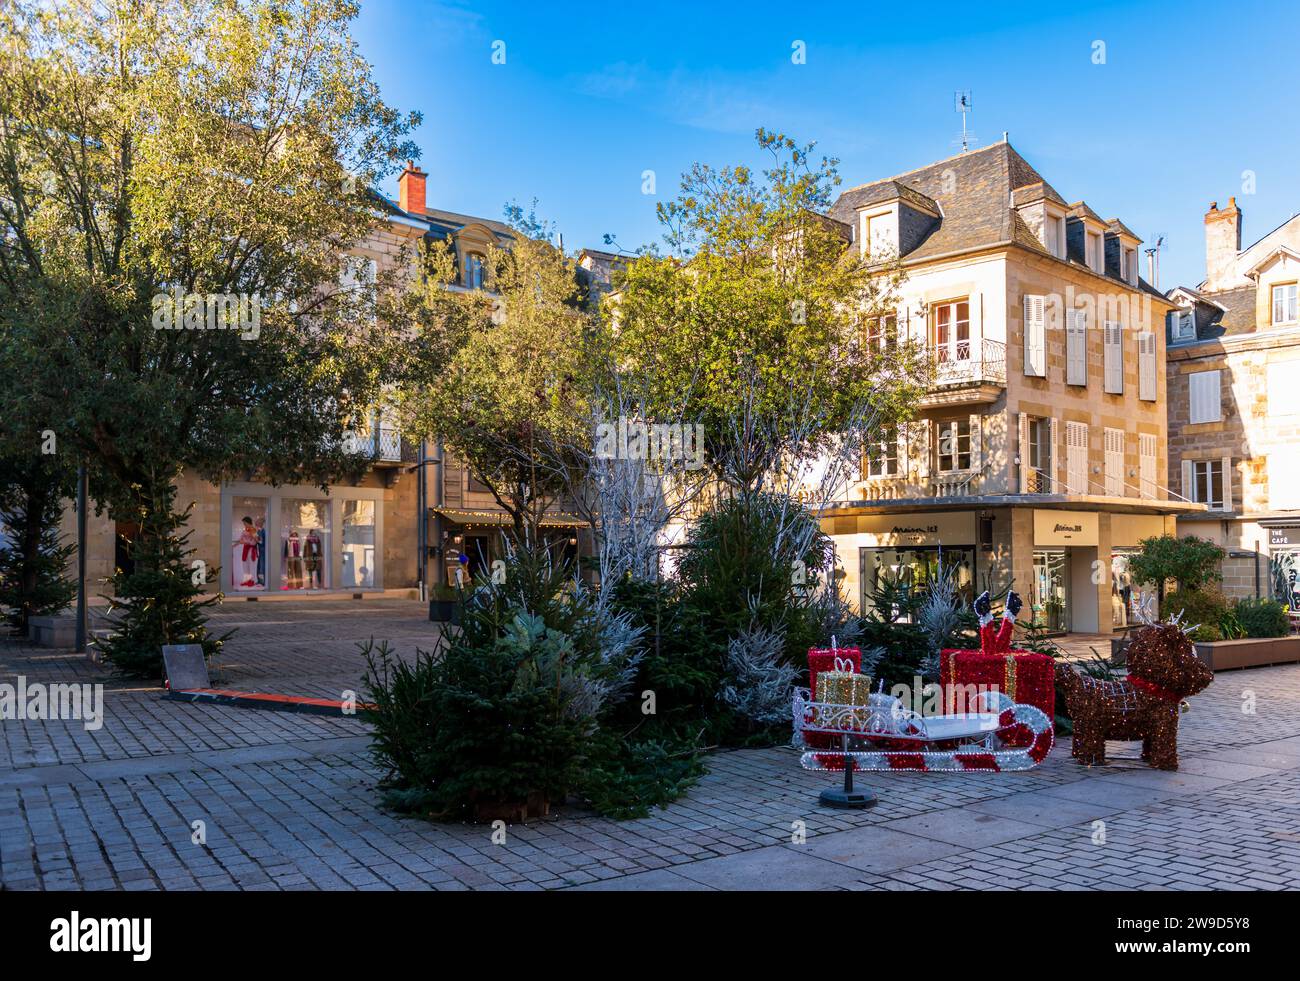 Weihnachtsdekoration, Place Civoire, in Brive la Gaillarde, Corrèze, Nouvelle-Aquitaine, Frankreich Stockfoto